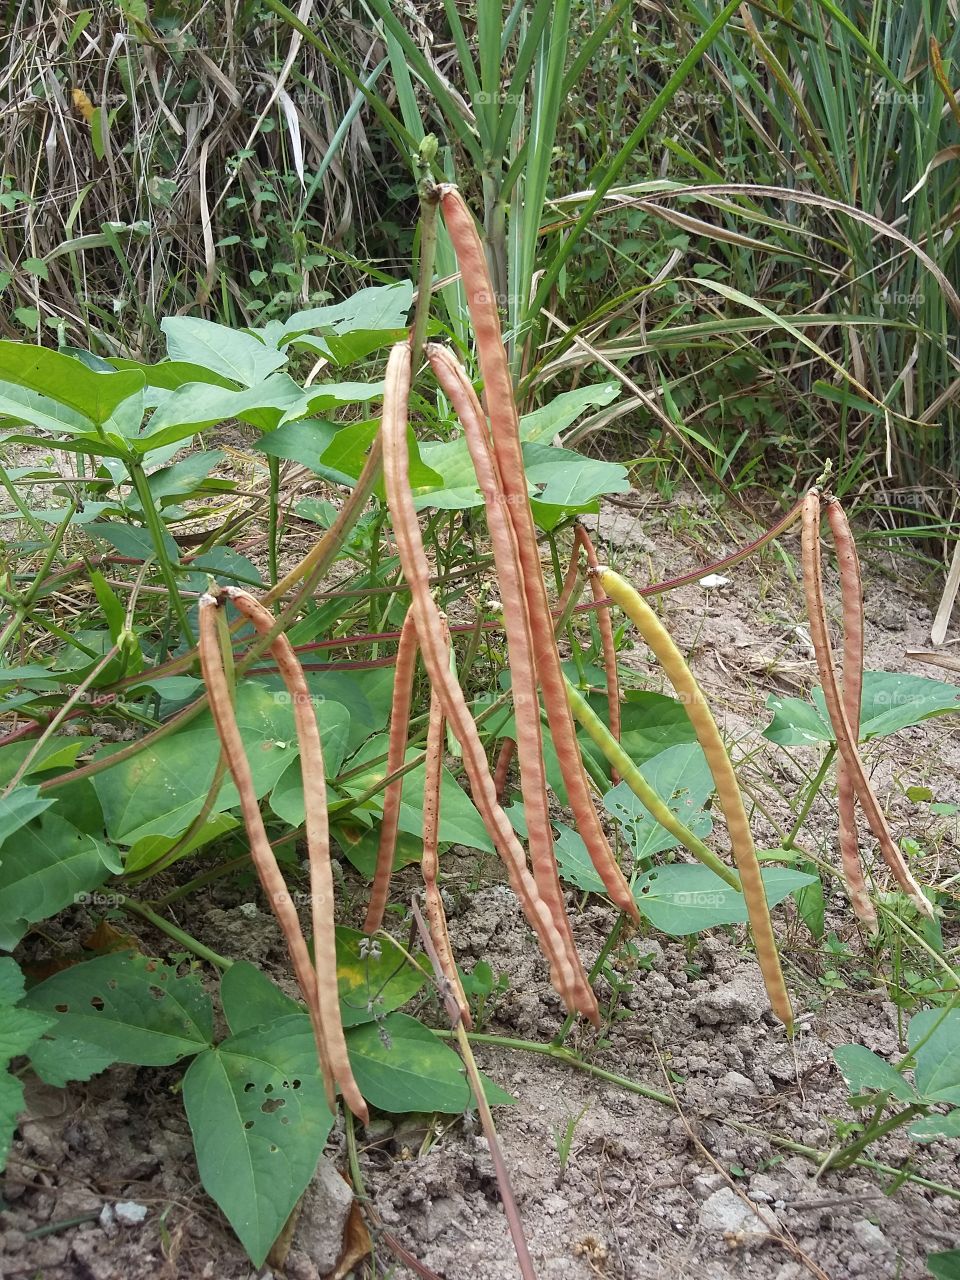 Beanstalk in Northeast Brazil